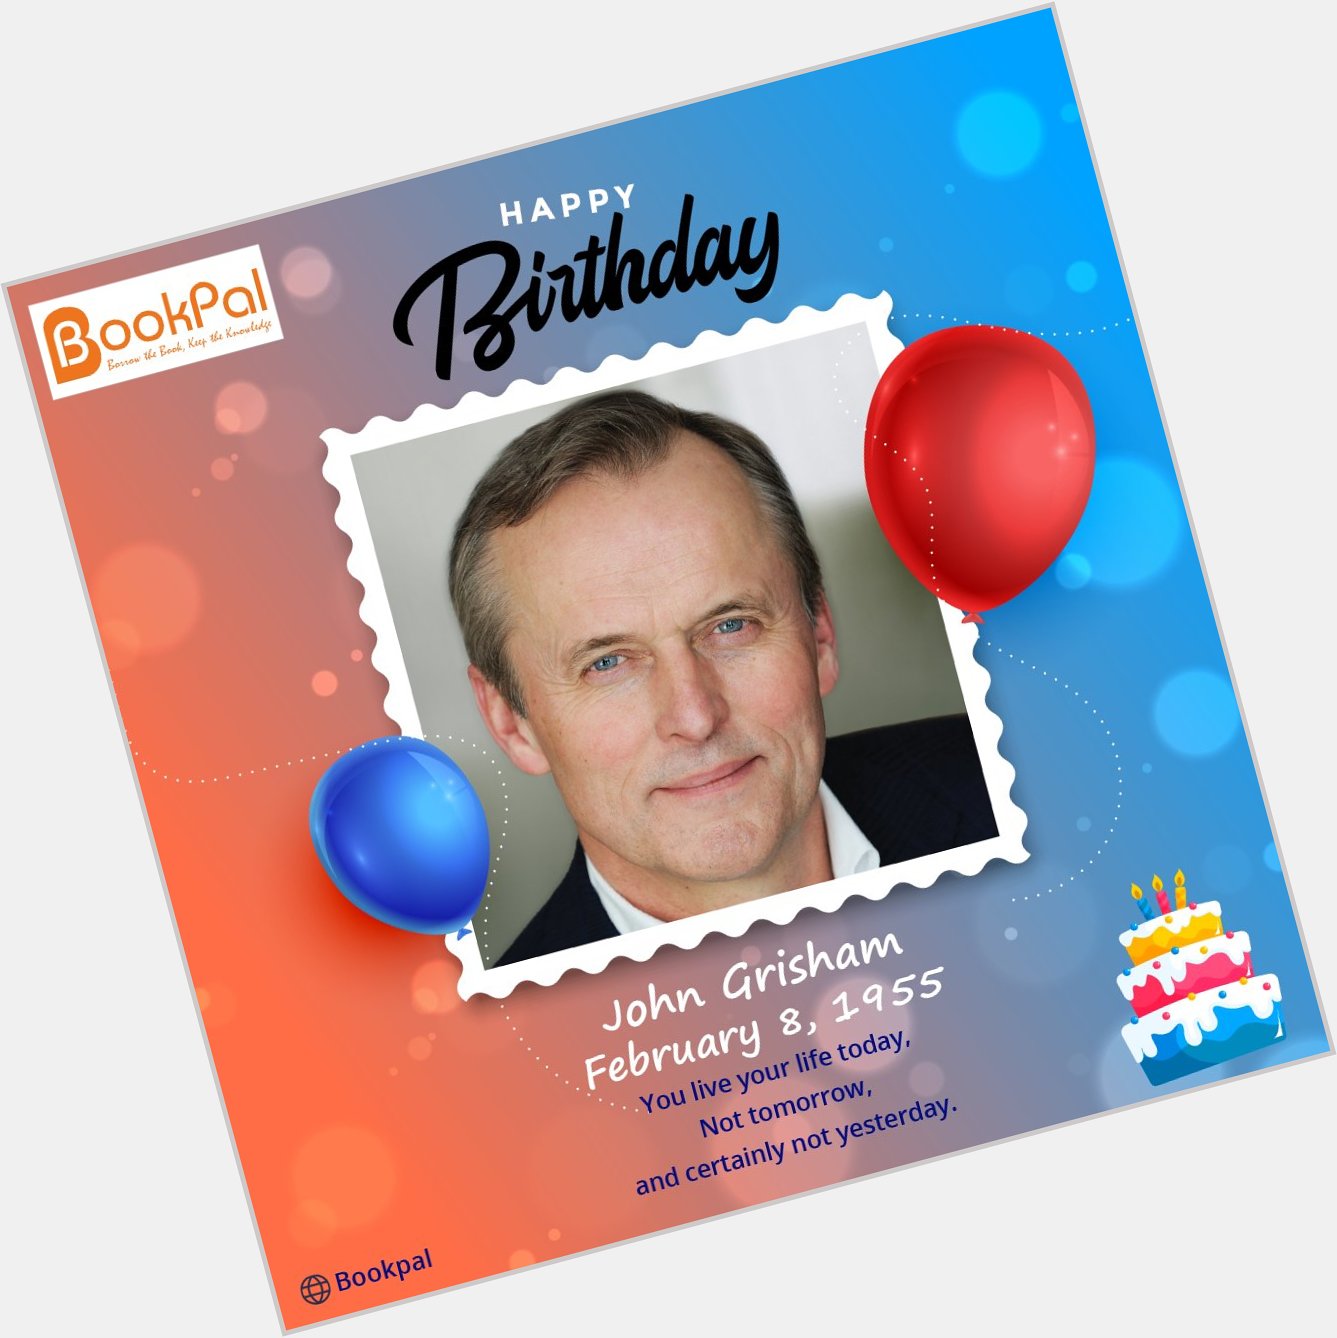 BookPal wishes happy birthday to John Grisham !!! 